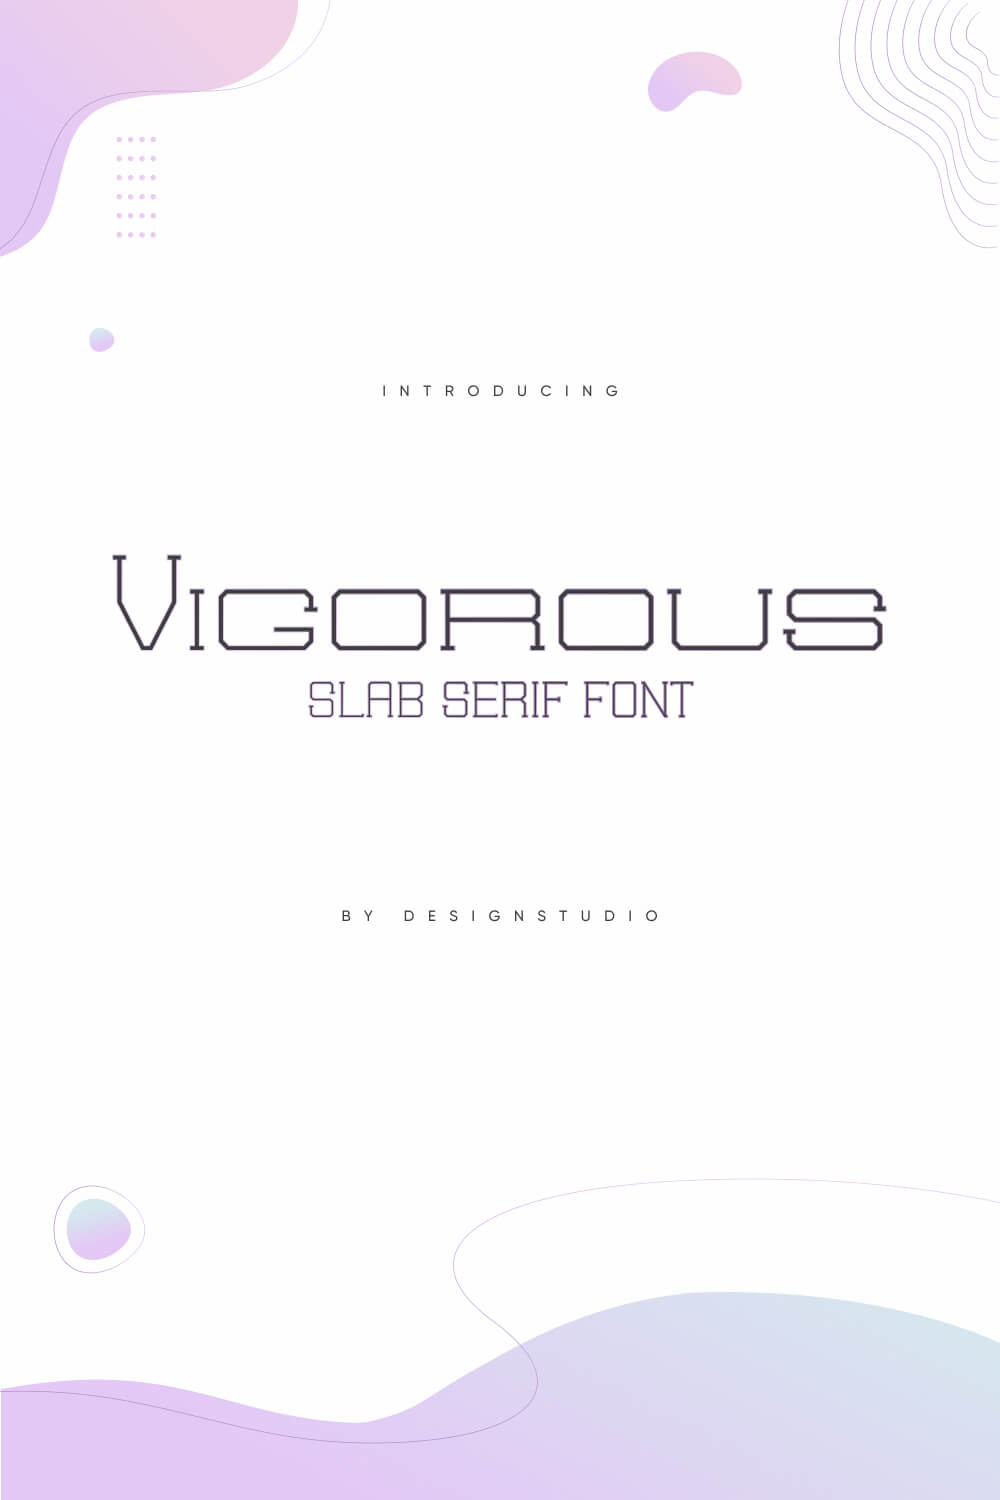 Vigorous Slab Serif Font pinterest image.